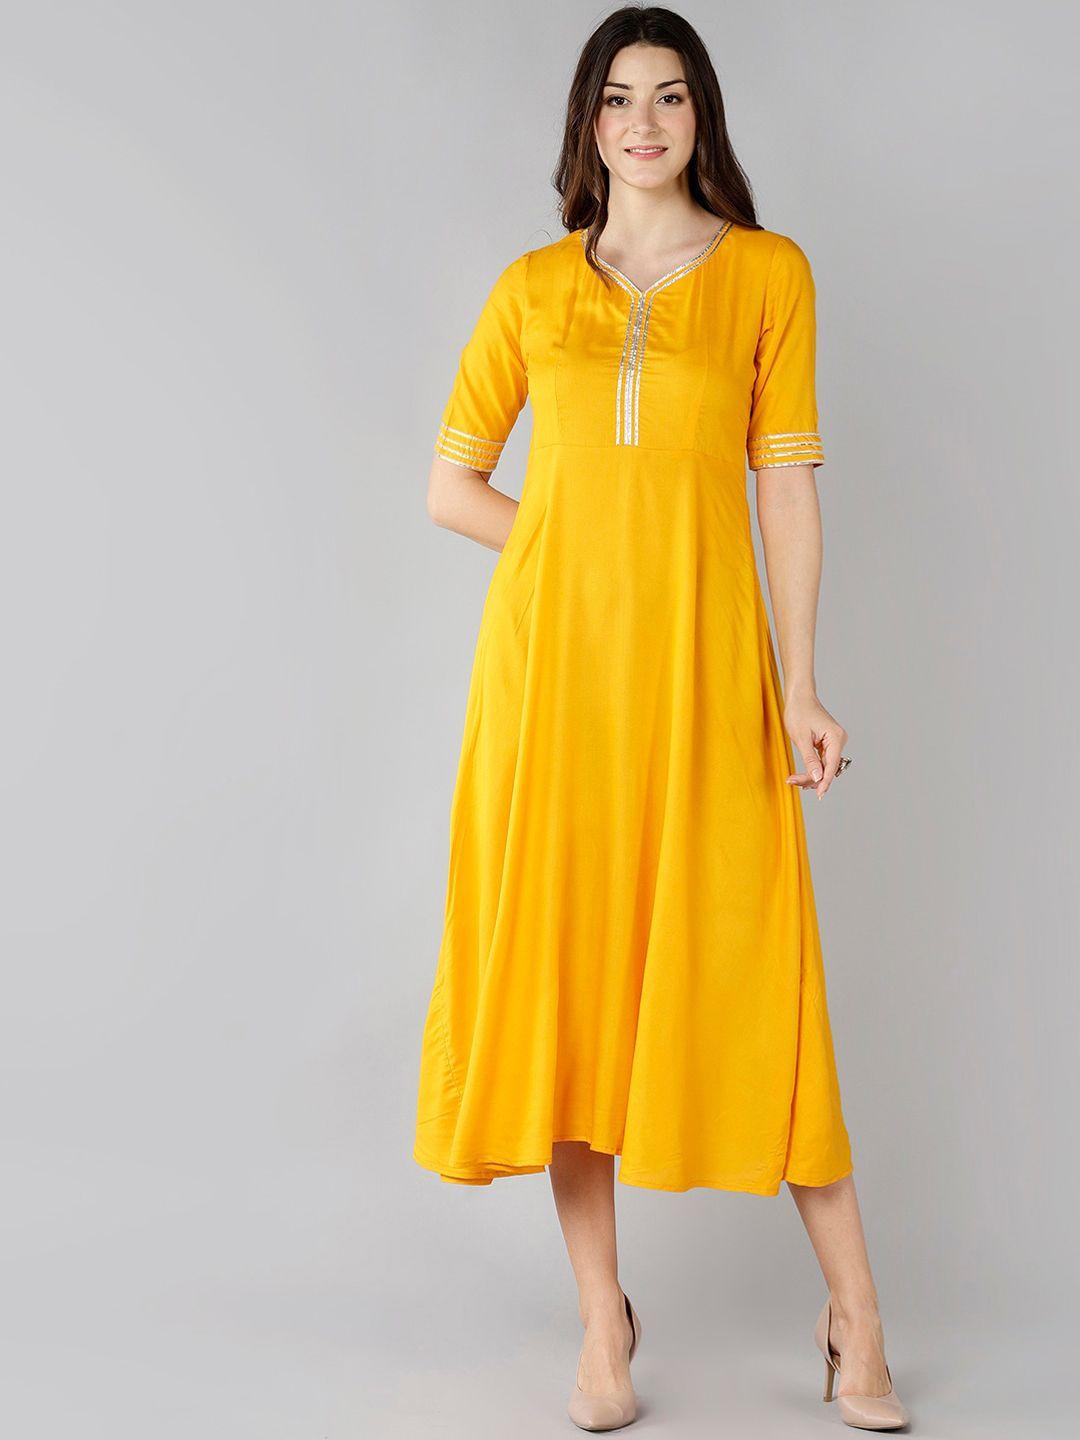 znx clothing women yellow a-line midi dress